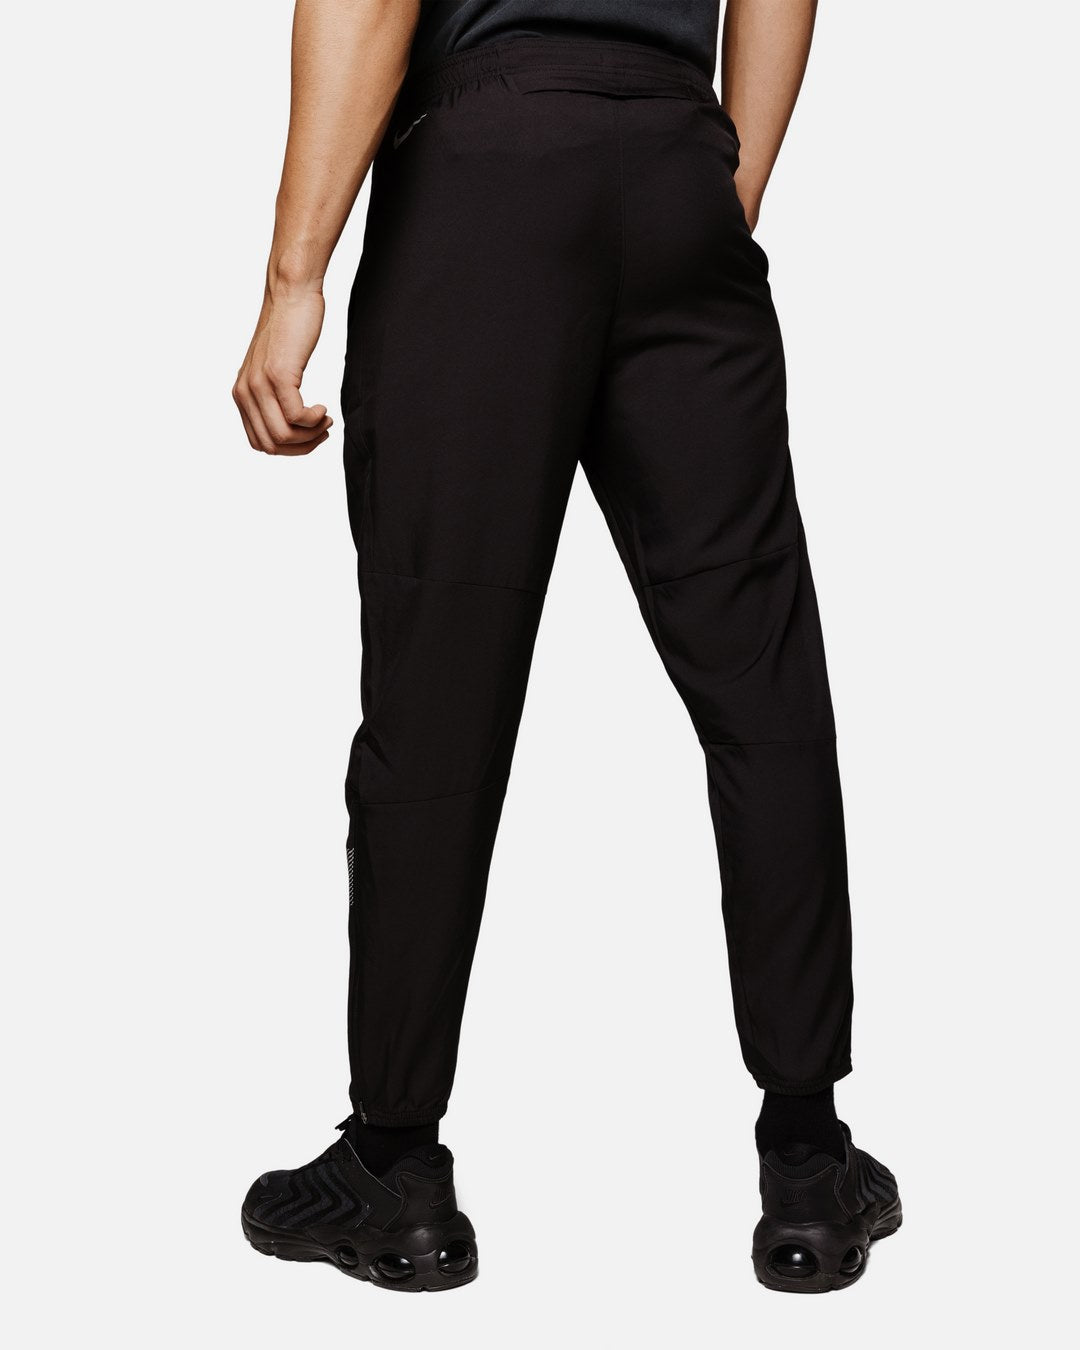 Nike Challenger Flash Pants - Black